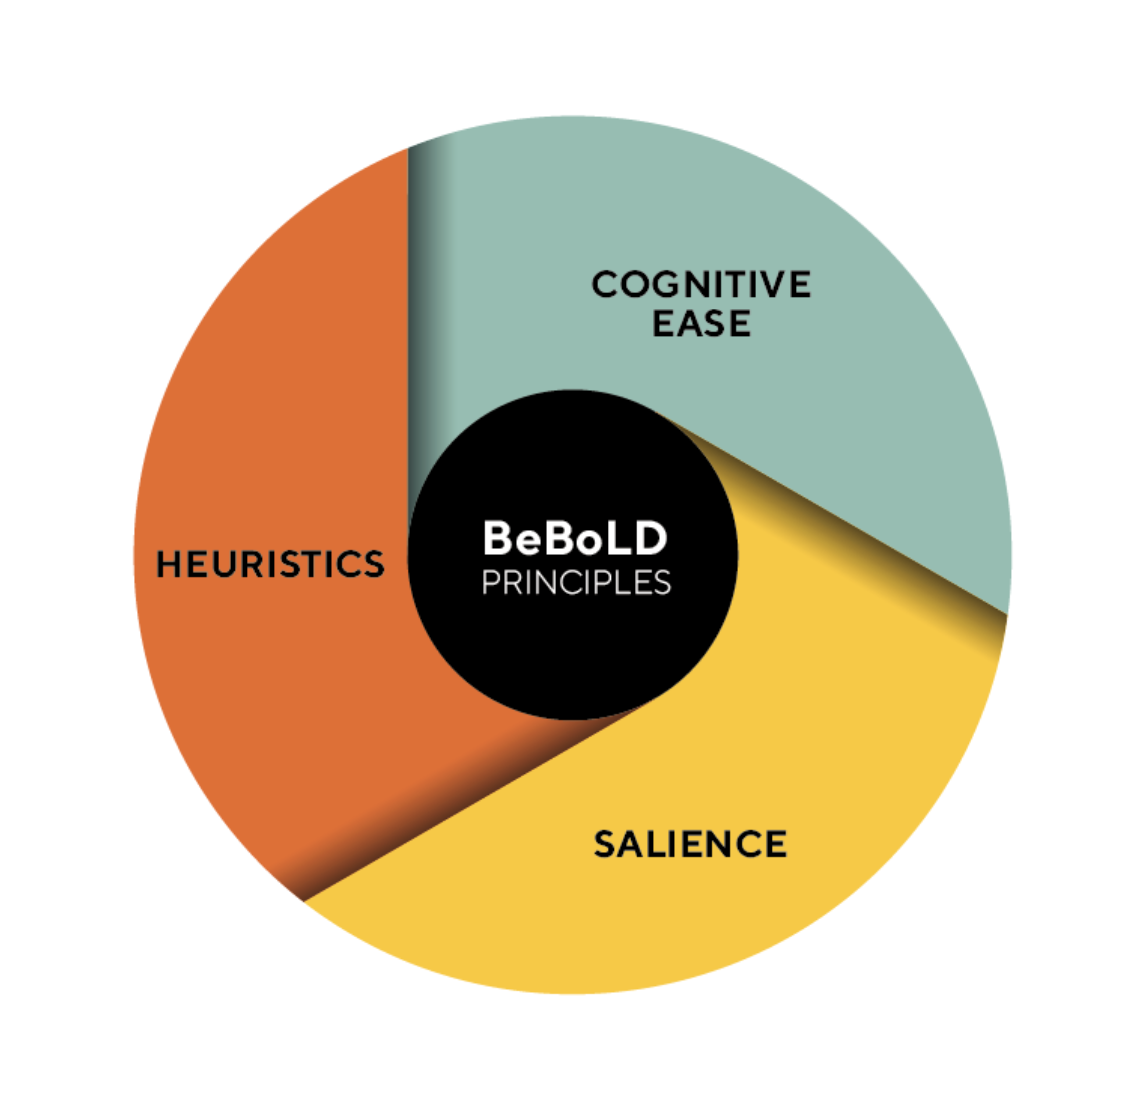 BeBoLD model principles